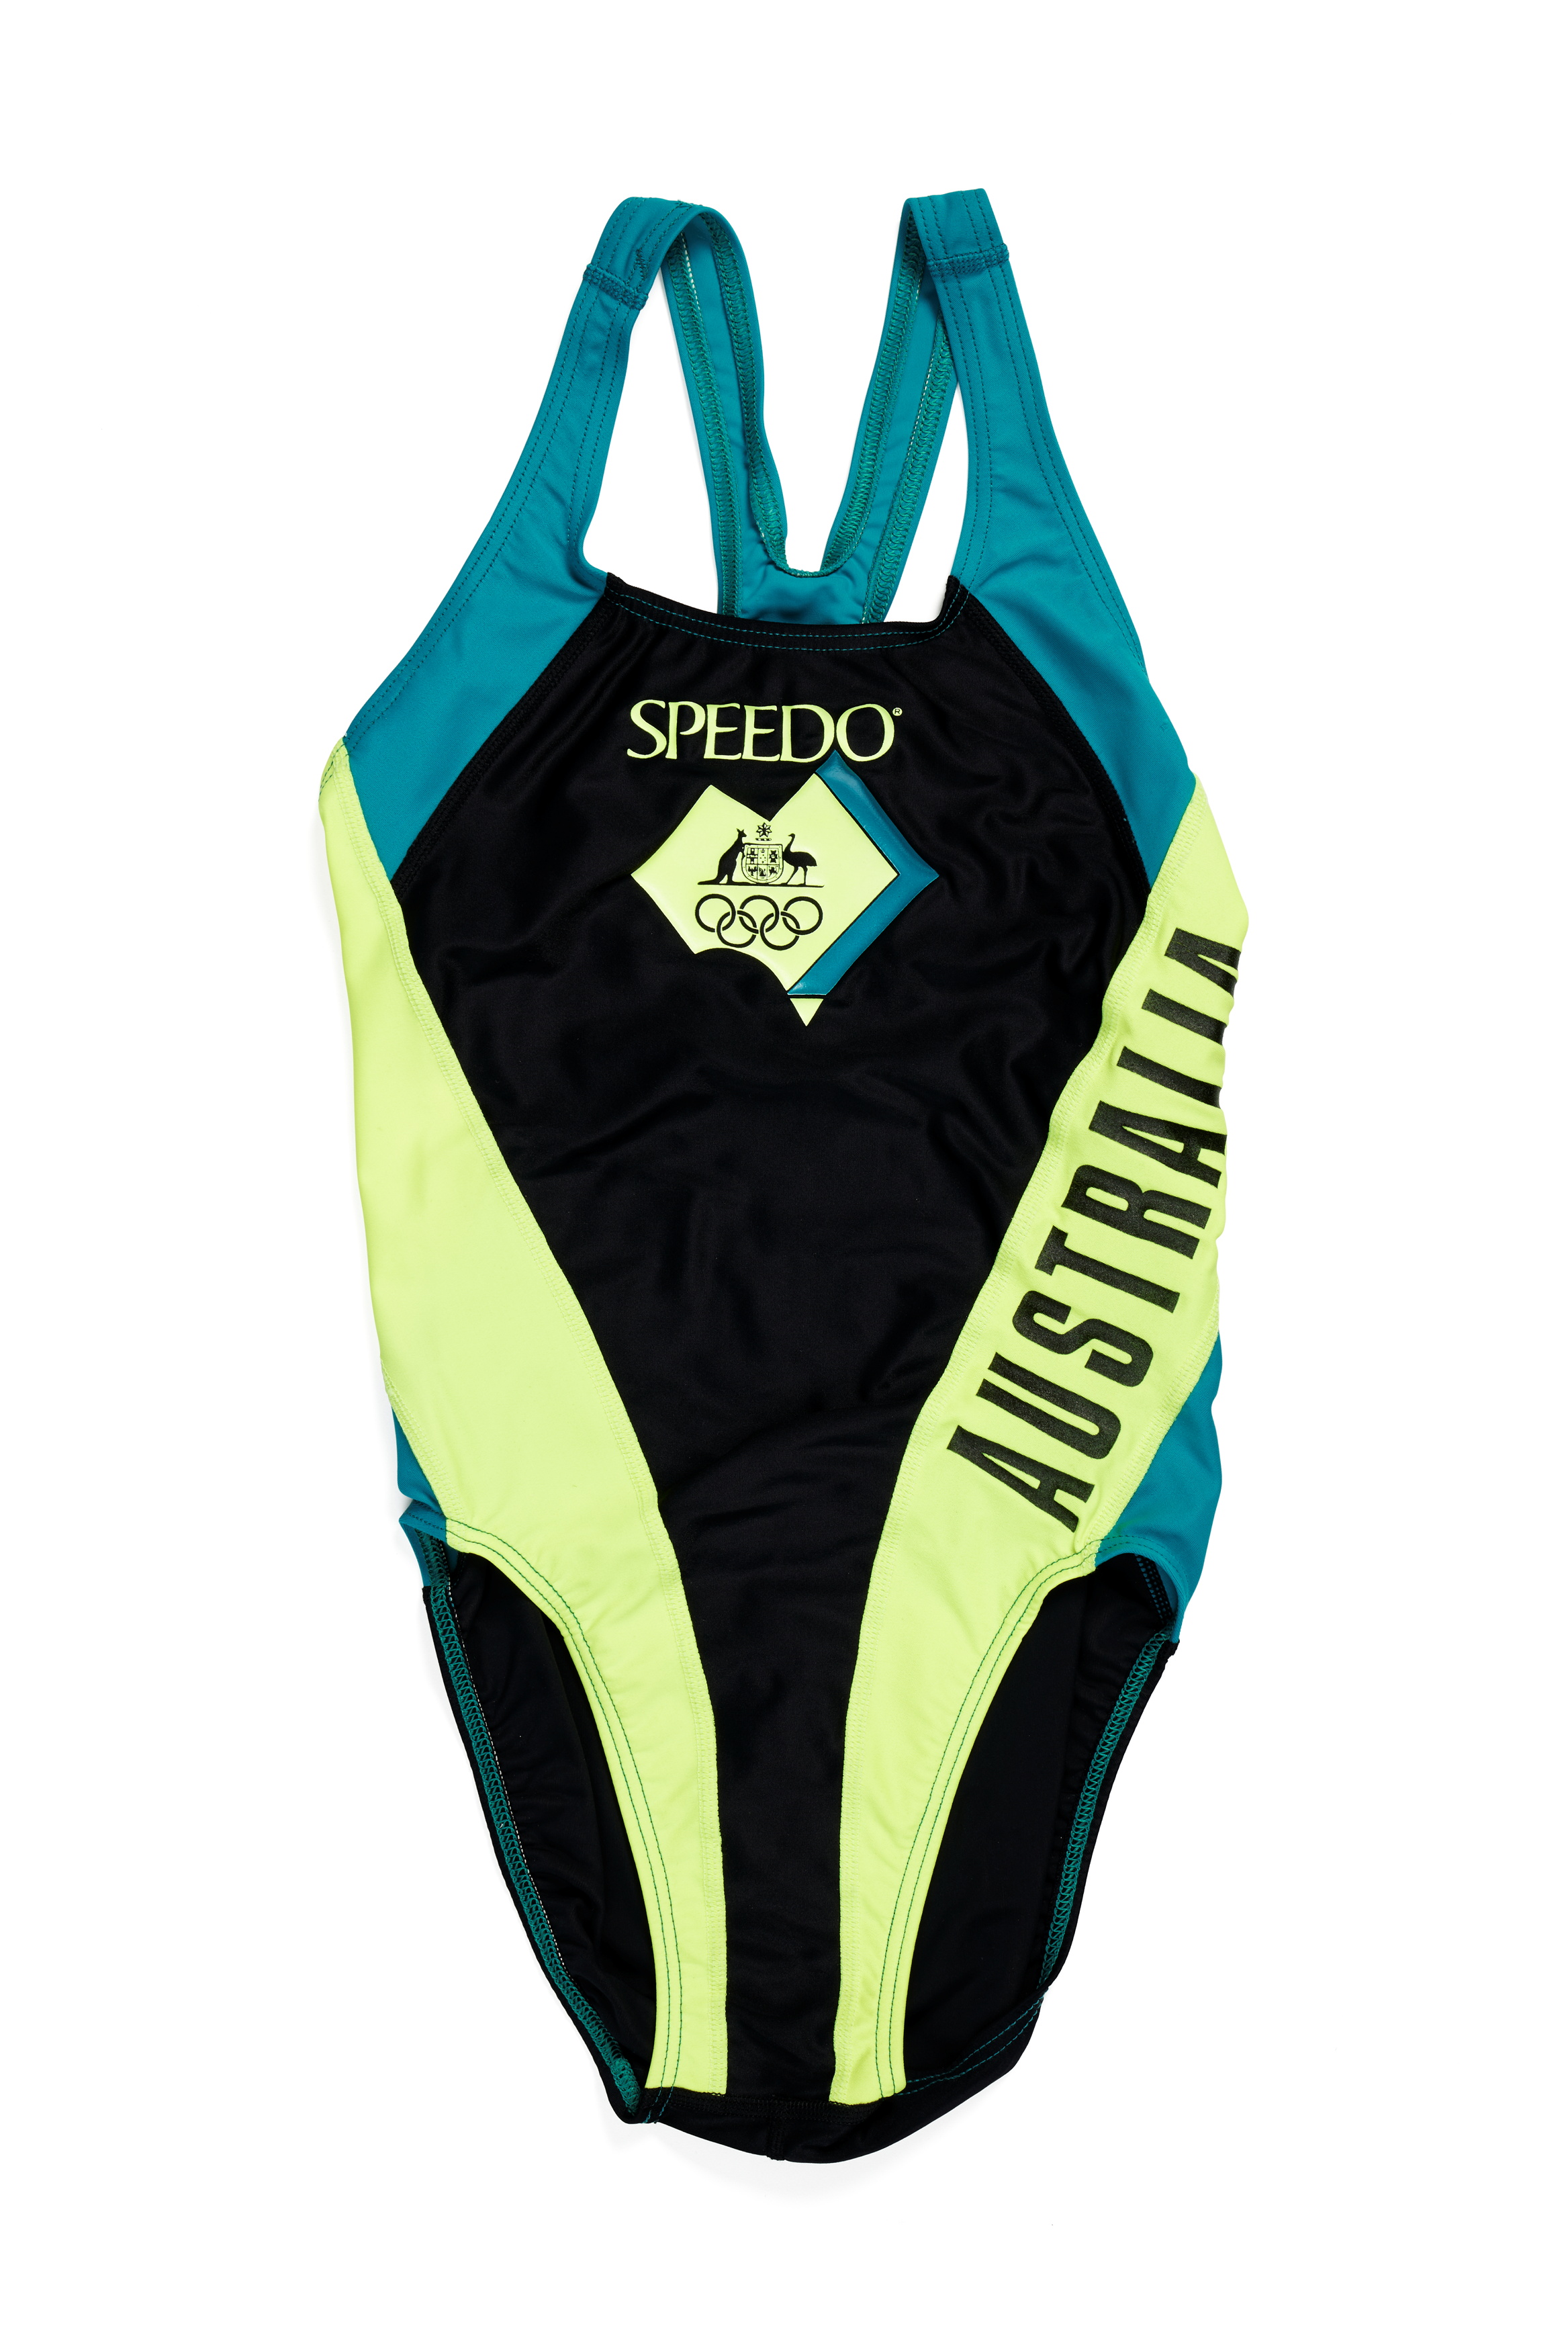 Womens swimsuit by Speedo for the Australian Olympic team